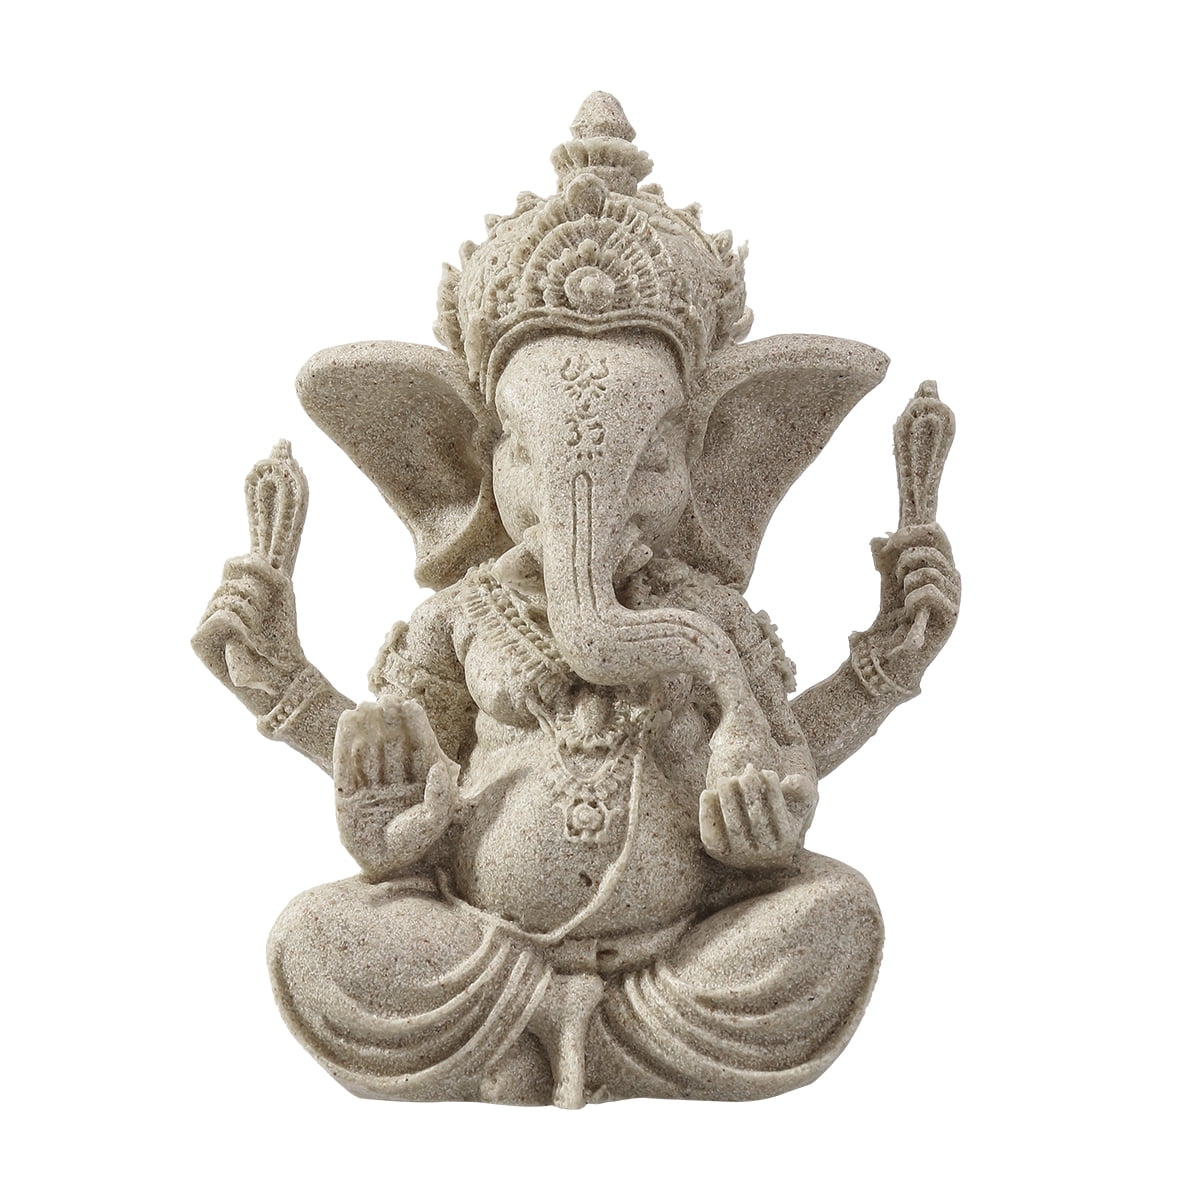 Vintage Resin Ganesha Elephant Statue Buddhism Sculpture Handmade Figurine 